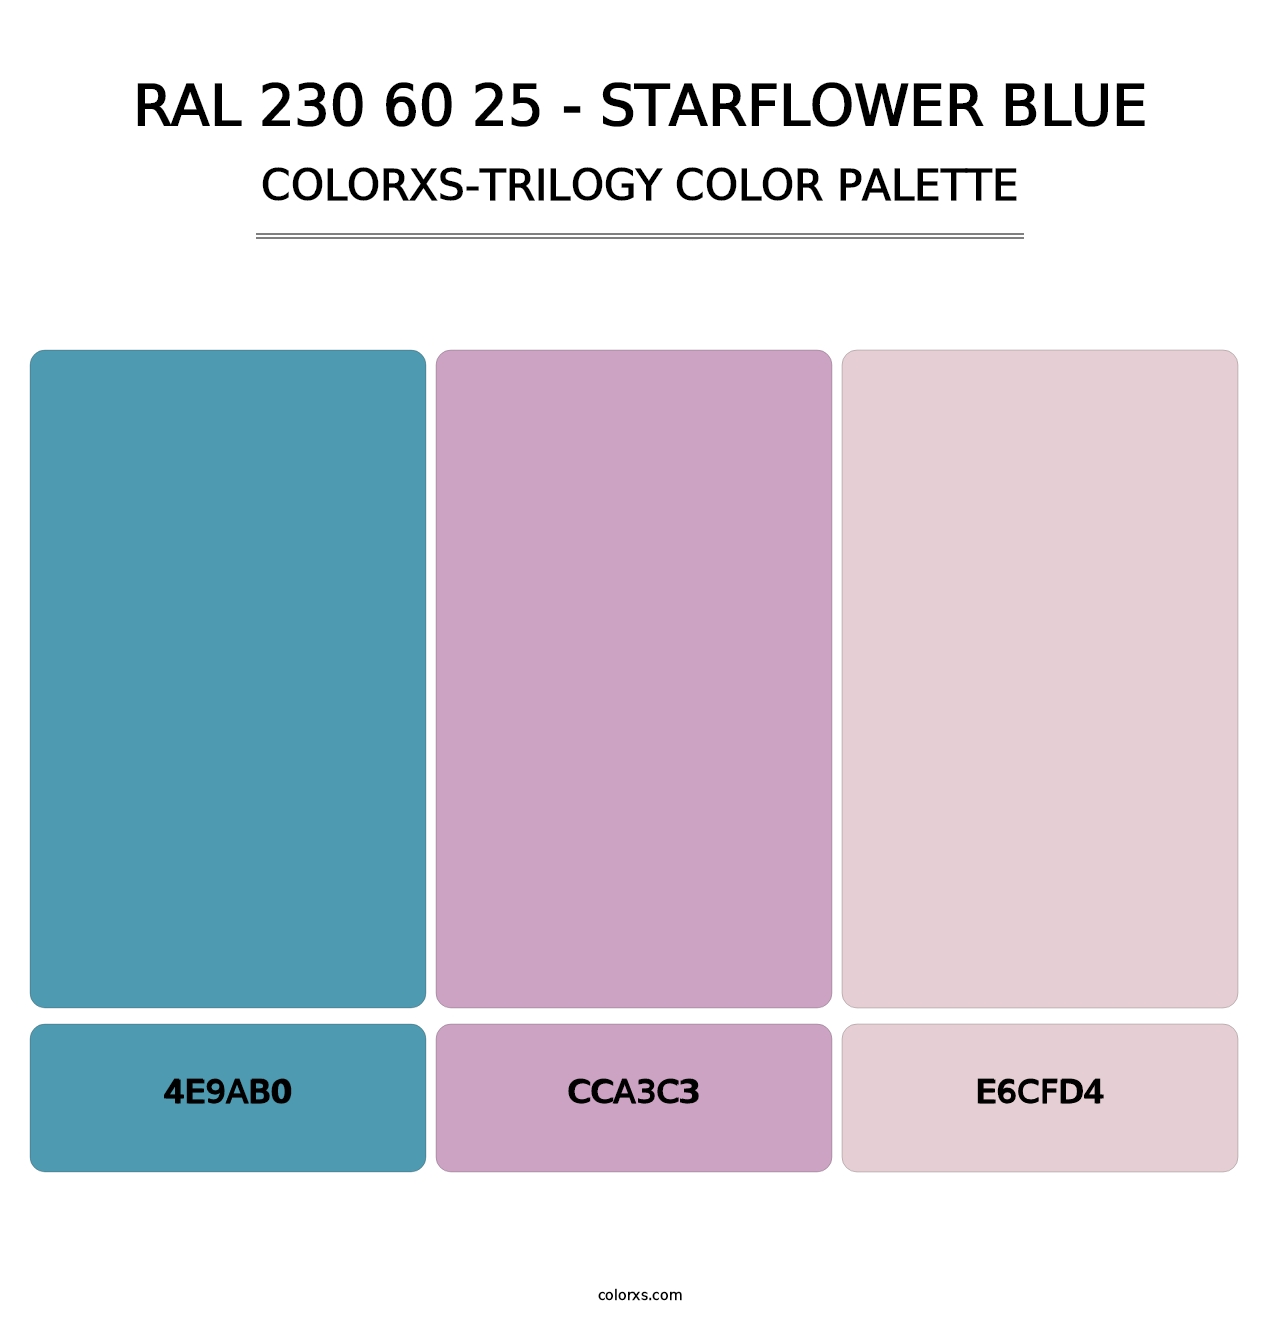 RAL 230 60 25 - Starflower Blue - Colorxs Trilogy Palette